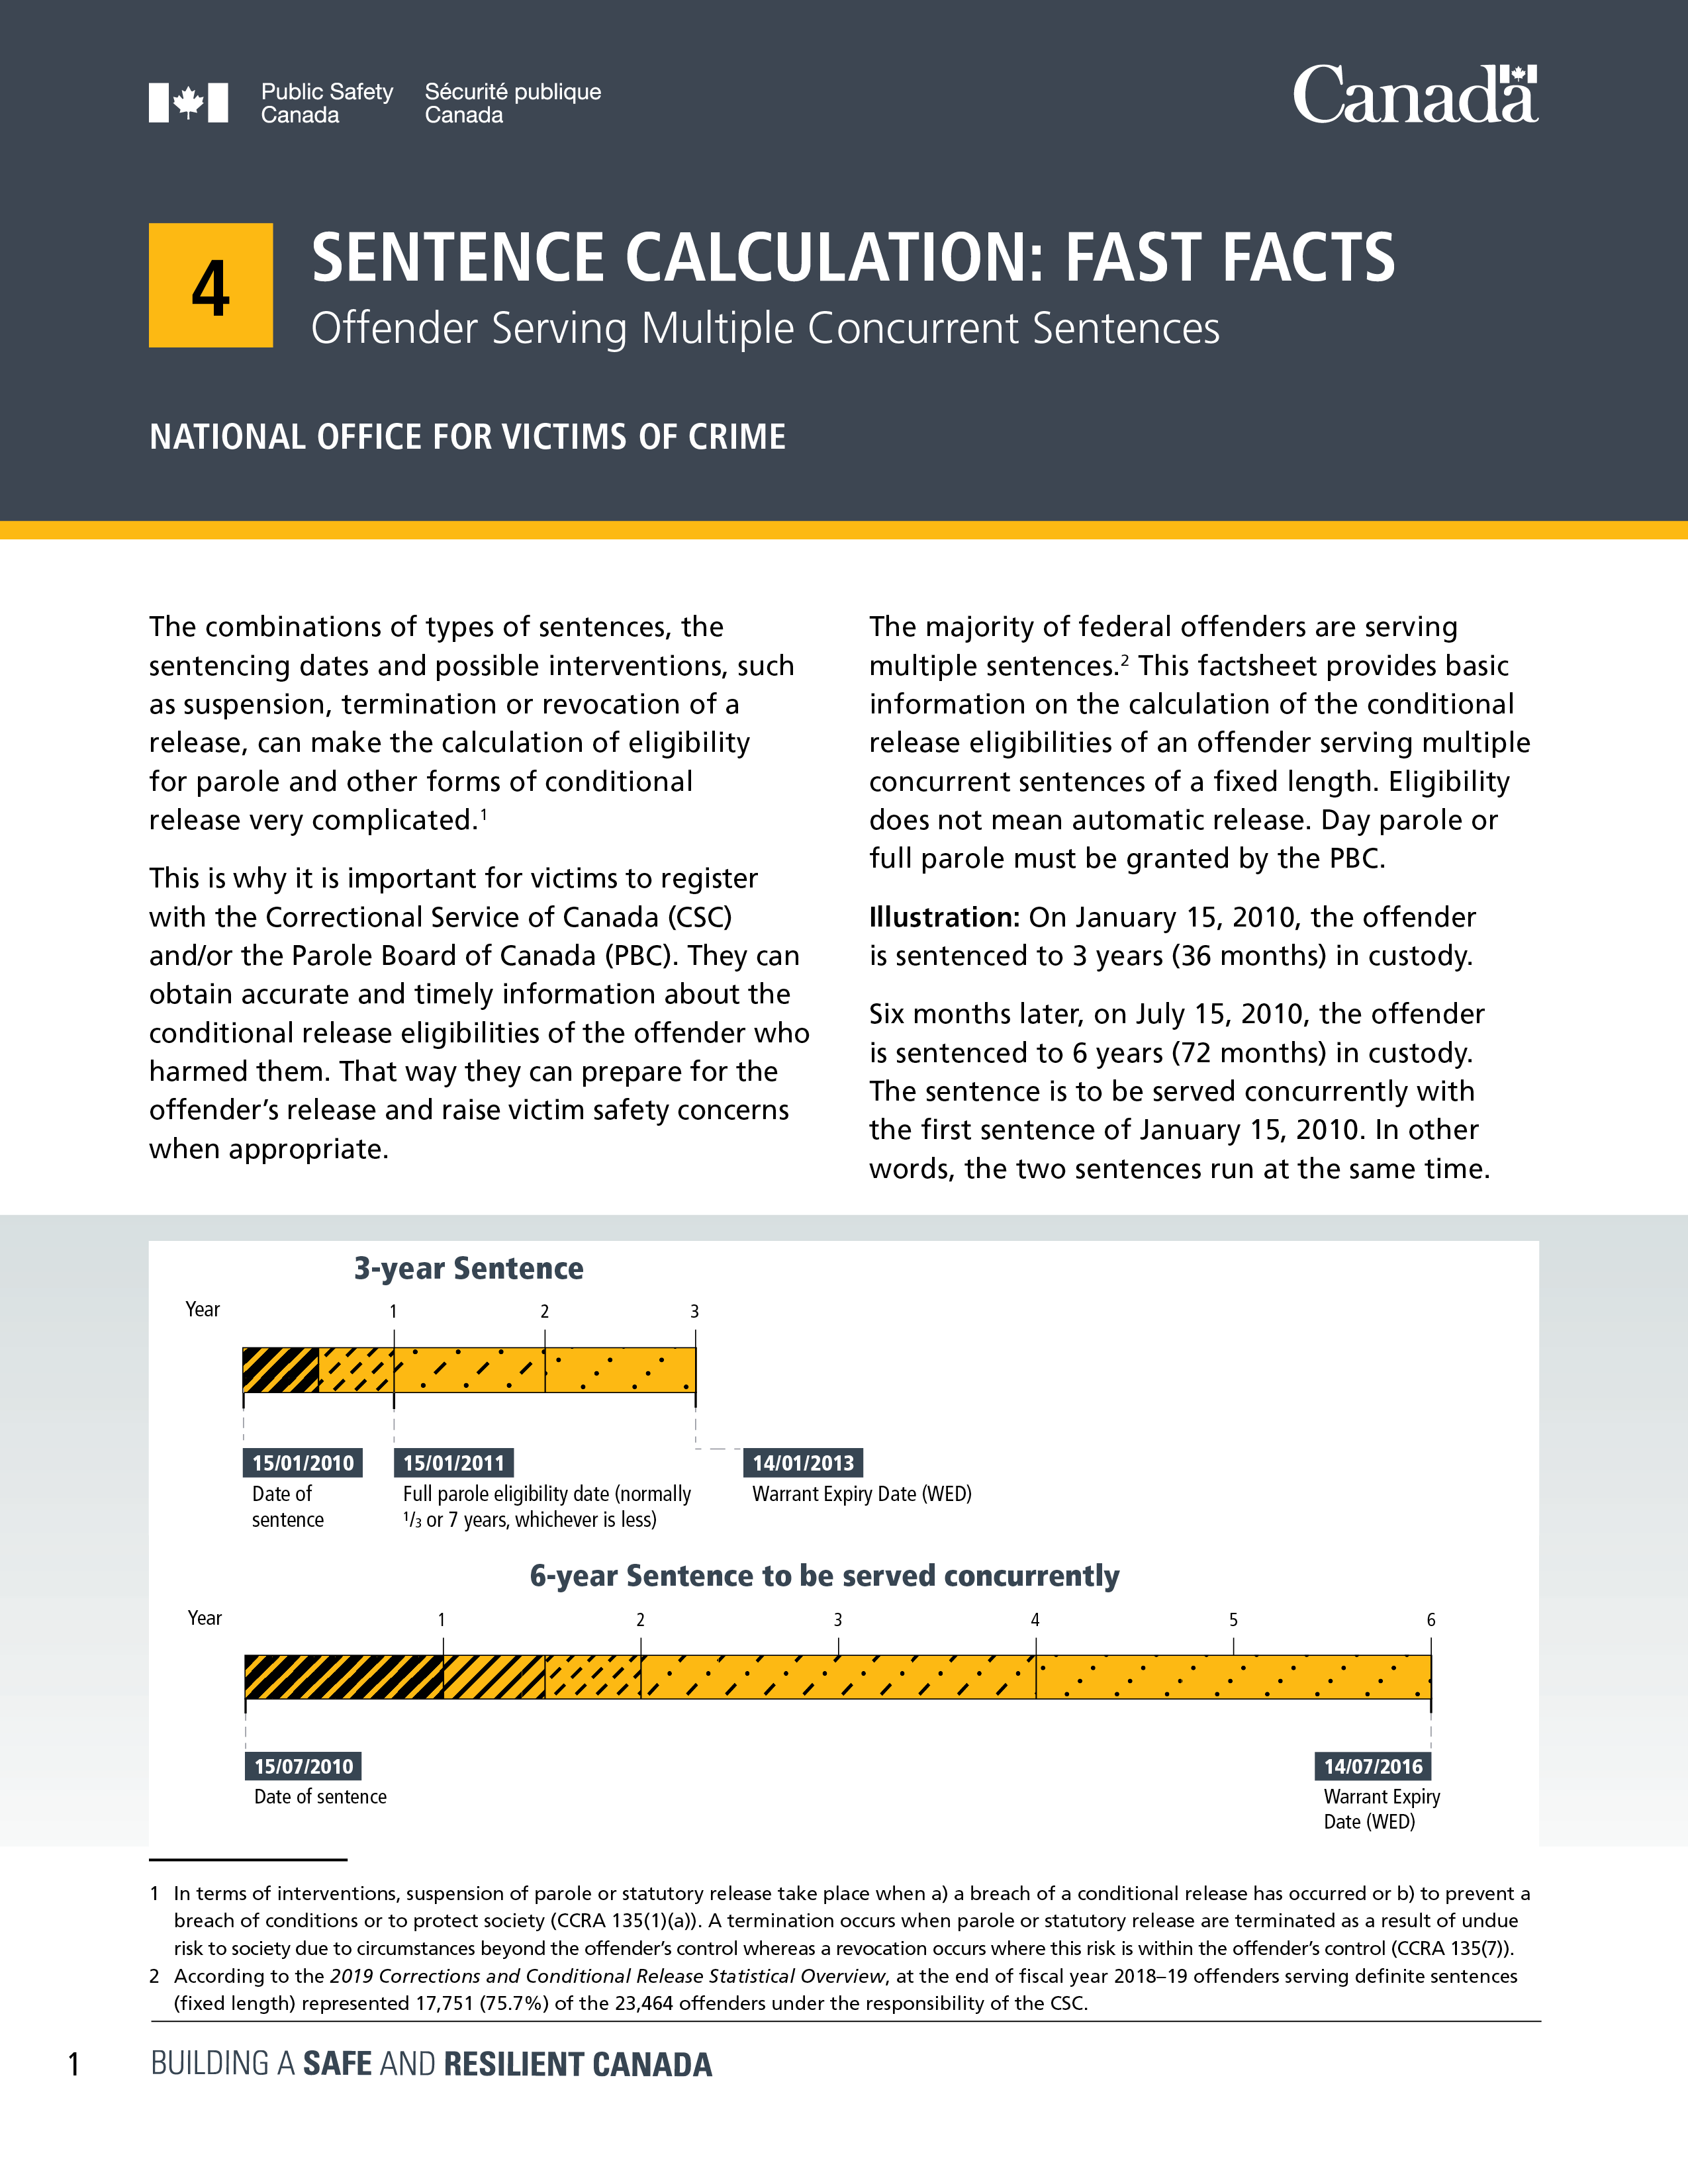 Sentence Calculation: Fast Facts: Offender Serving Multiple Concurrent Sentences